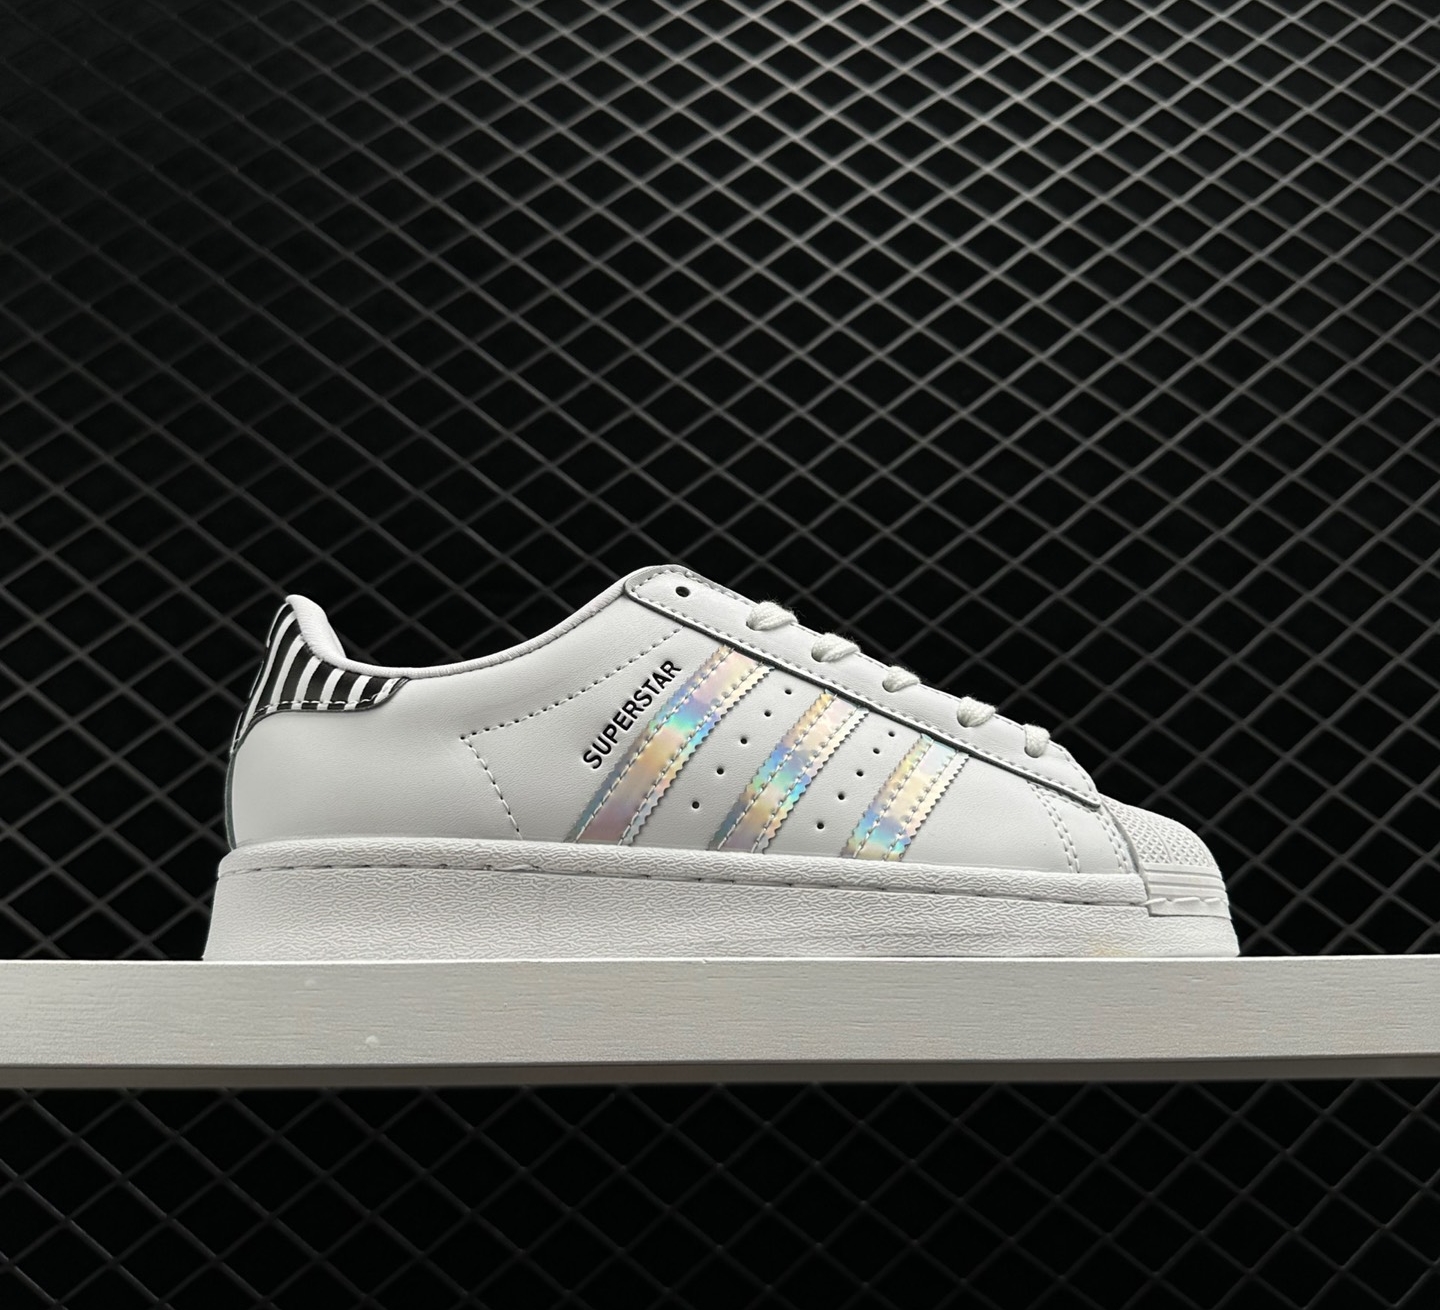 Adidas Originals Superstar Bold White Silver Black FY5131 - Stylish and Classic Design